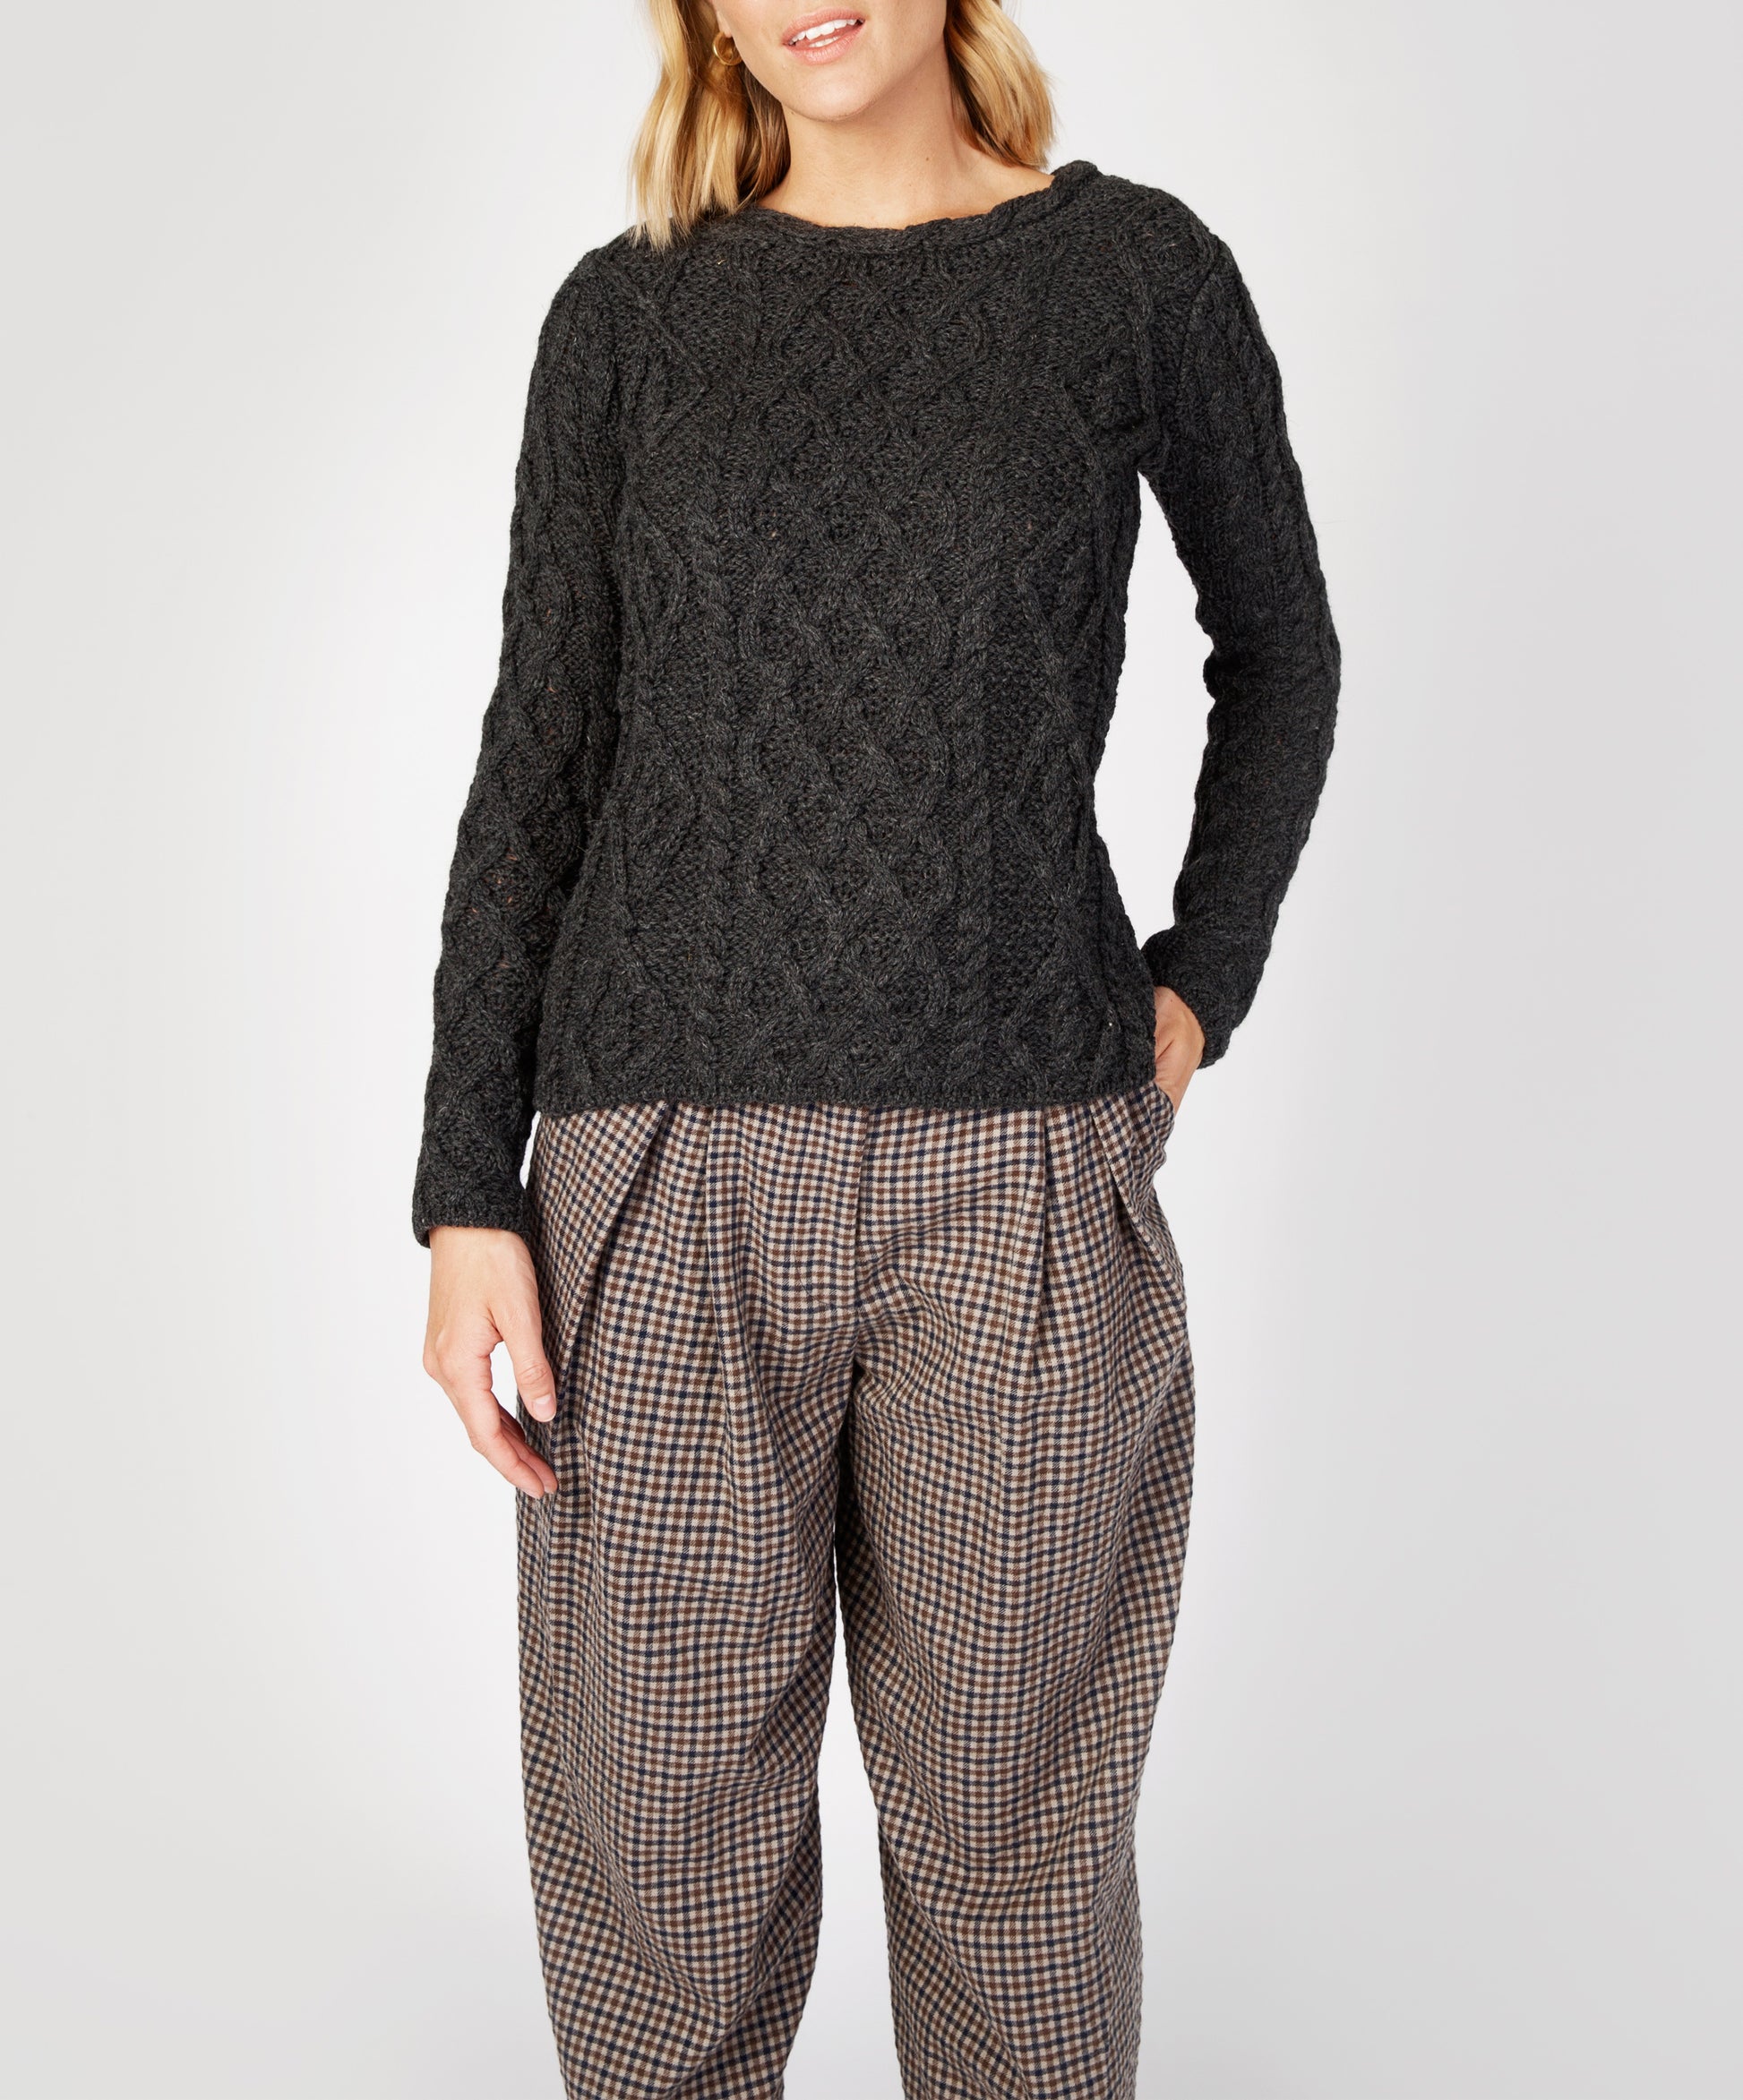 IrelandsEye Knitwear Lambay Lattice Cable Aran Sweater Graphite